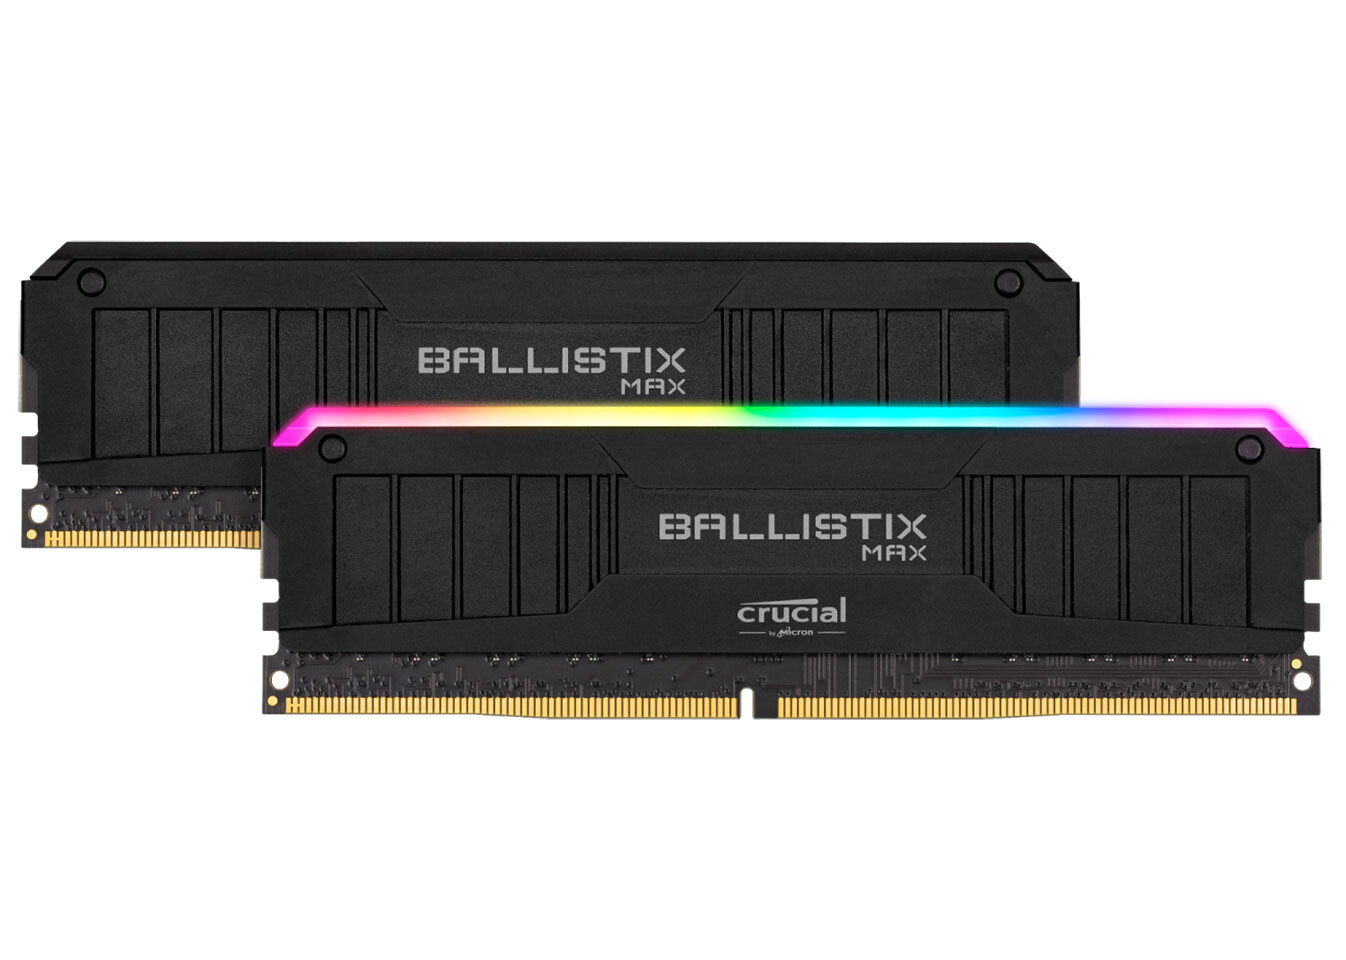 Micron Announces Crucial Ballistix MAX 5100 Gaming Memory